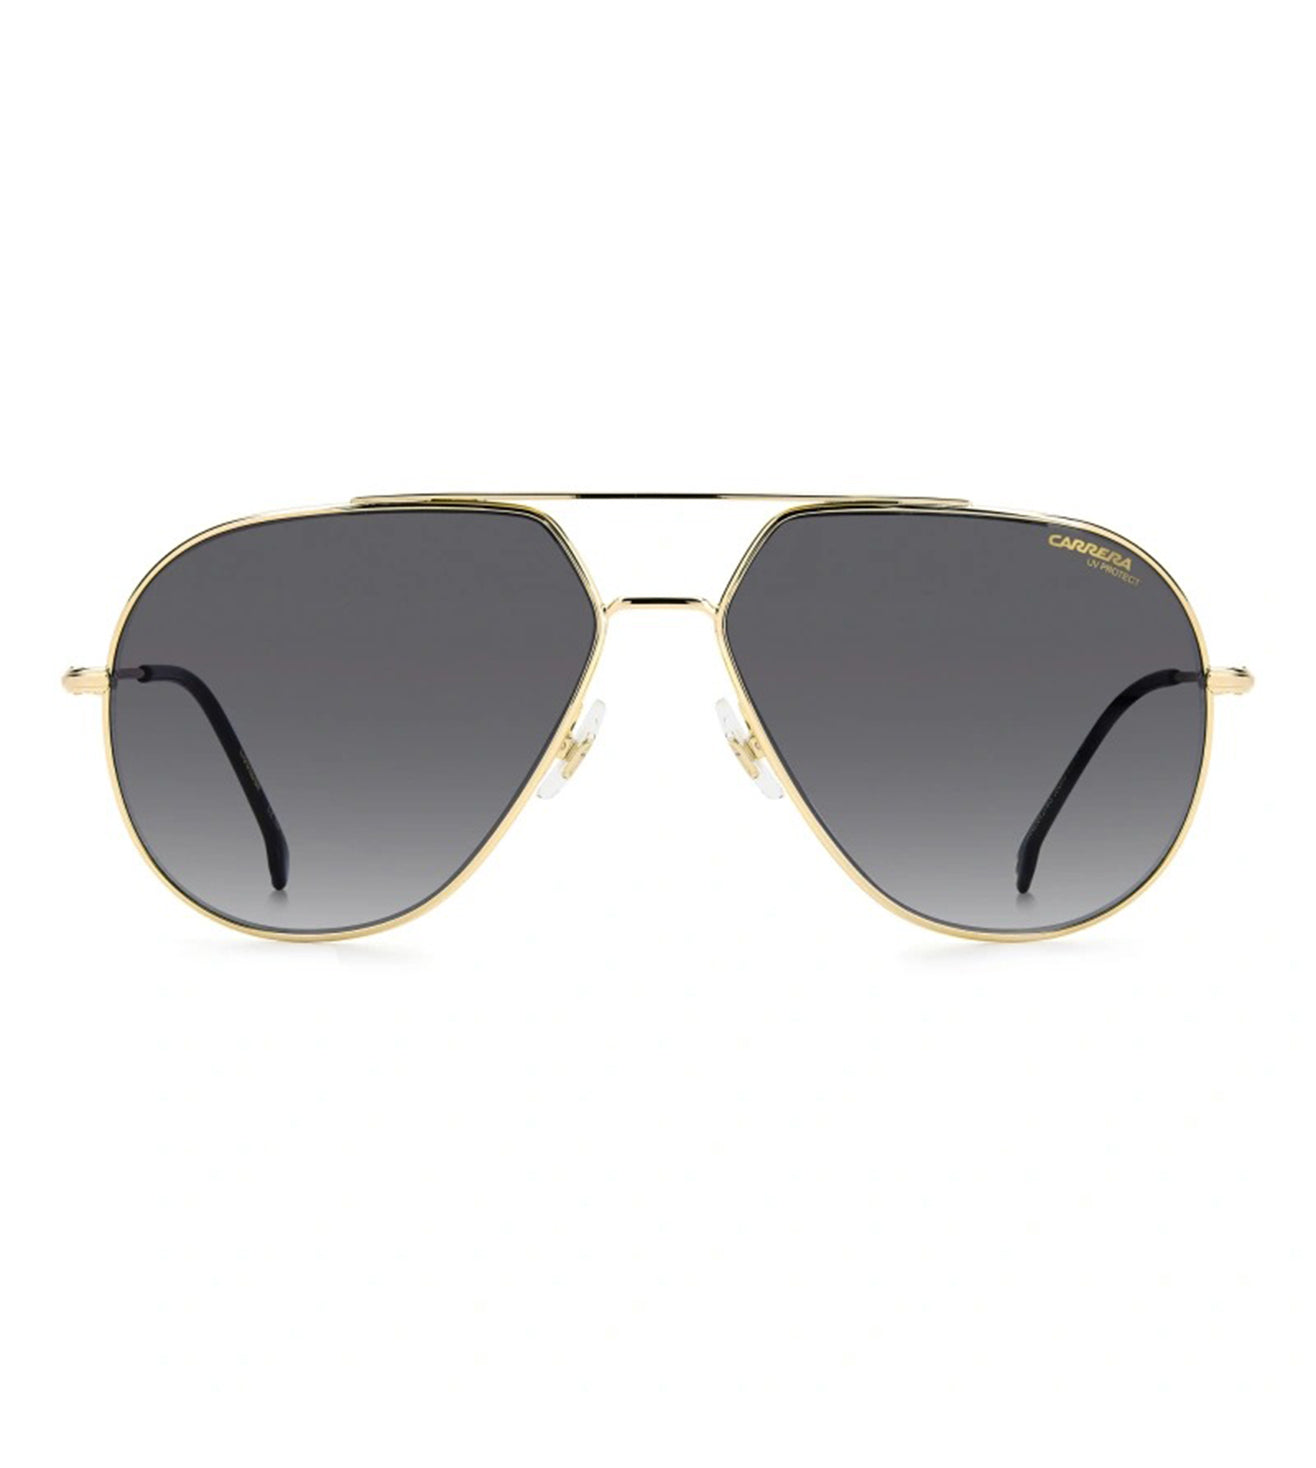 Carrera Men's Dark Grey Shaded Aviator Sunglasses